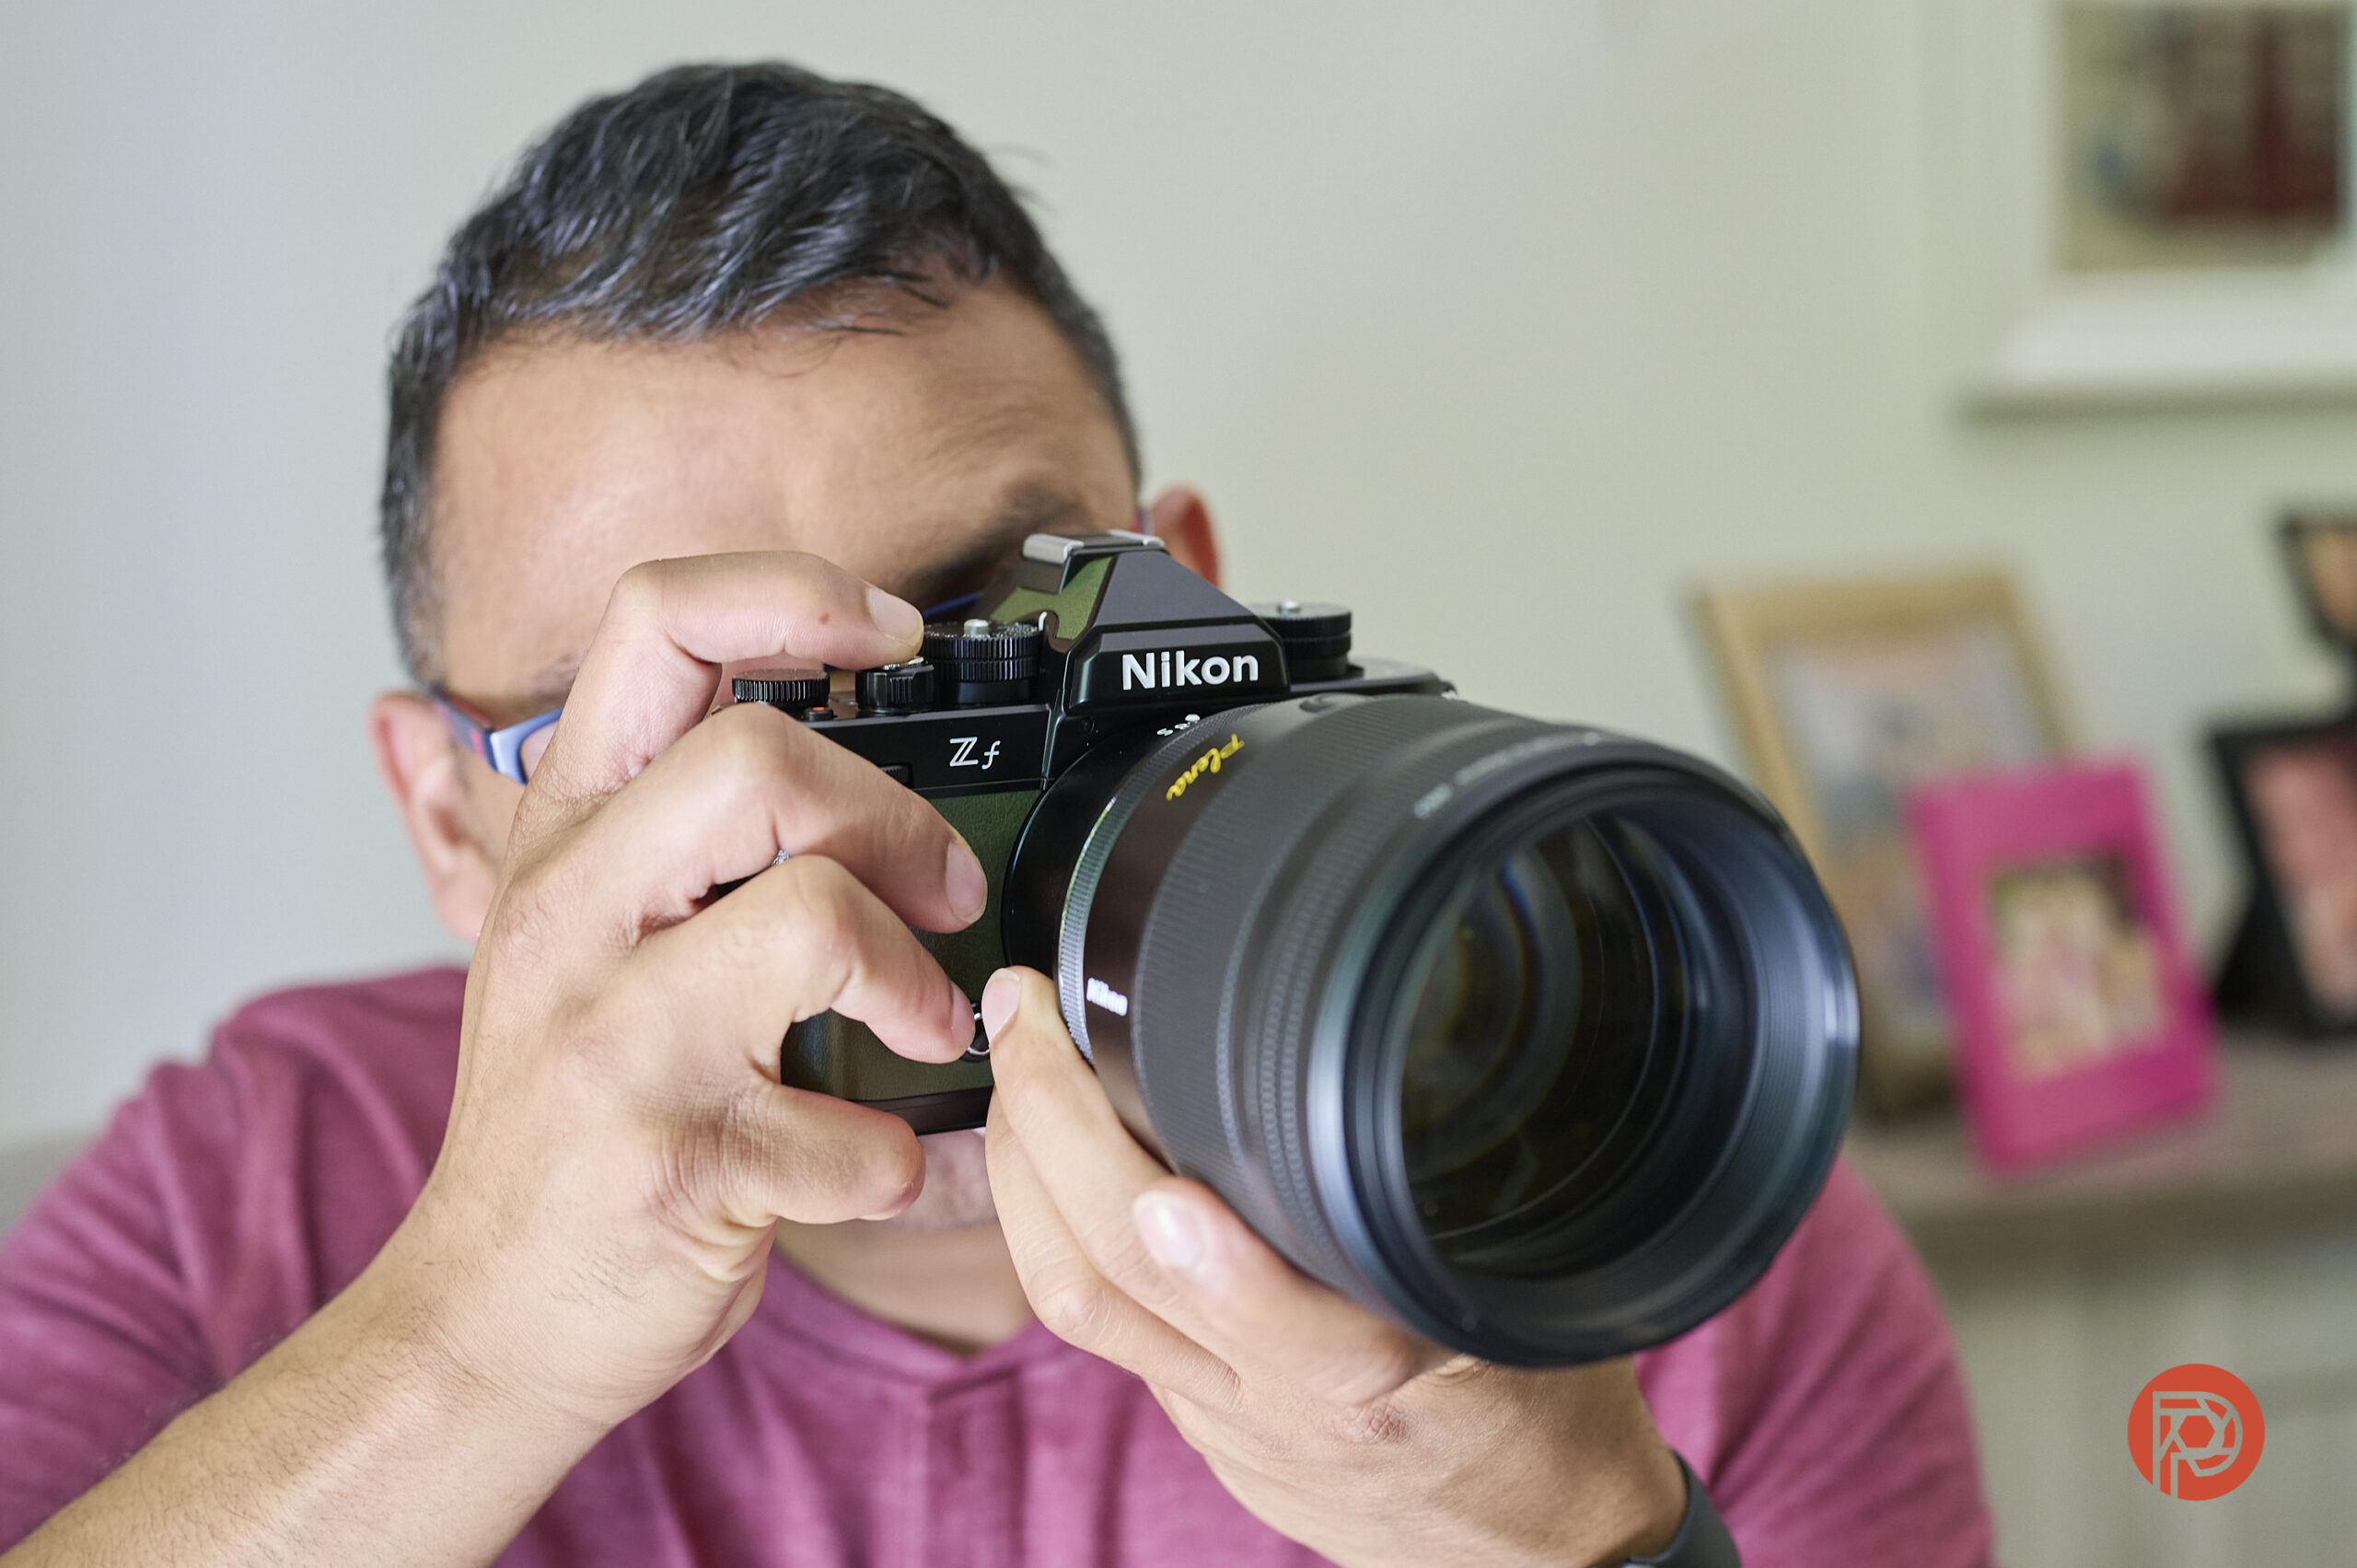 Nikon Zf review – a retro delight